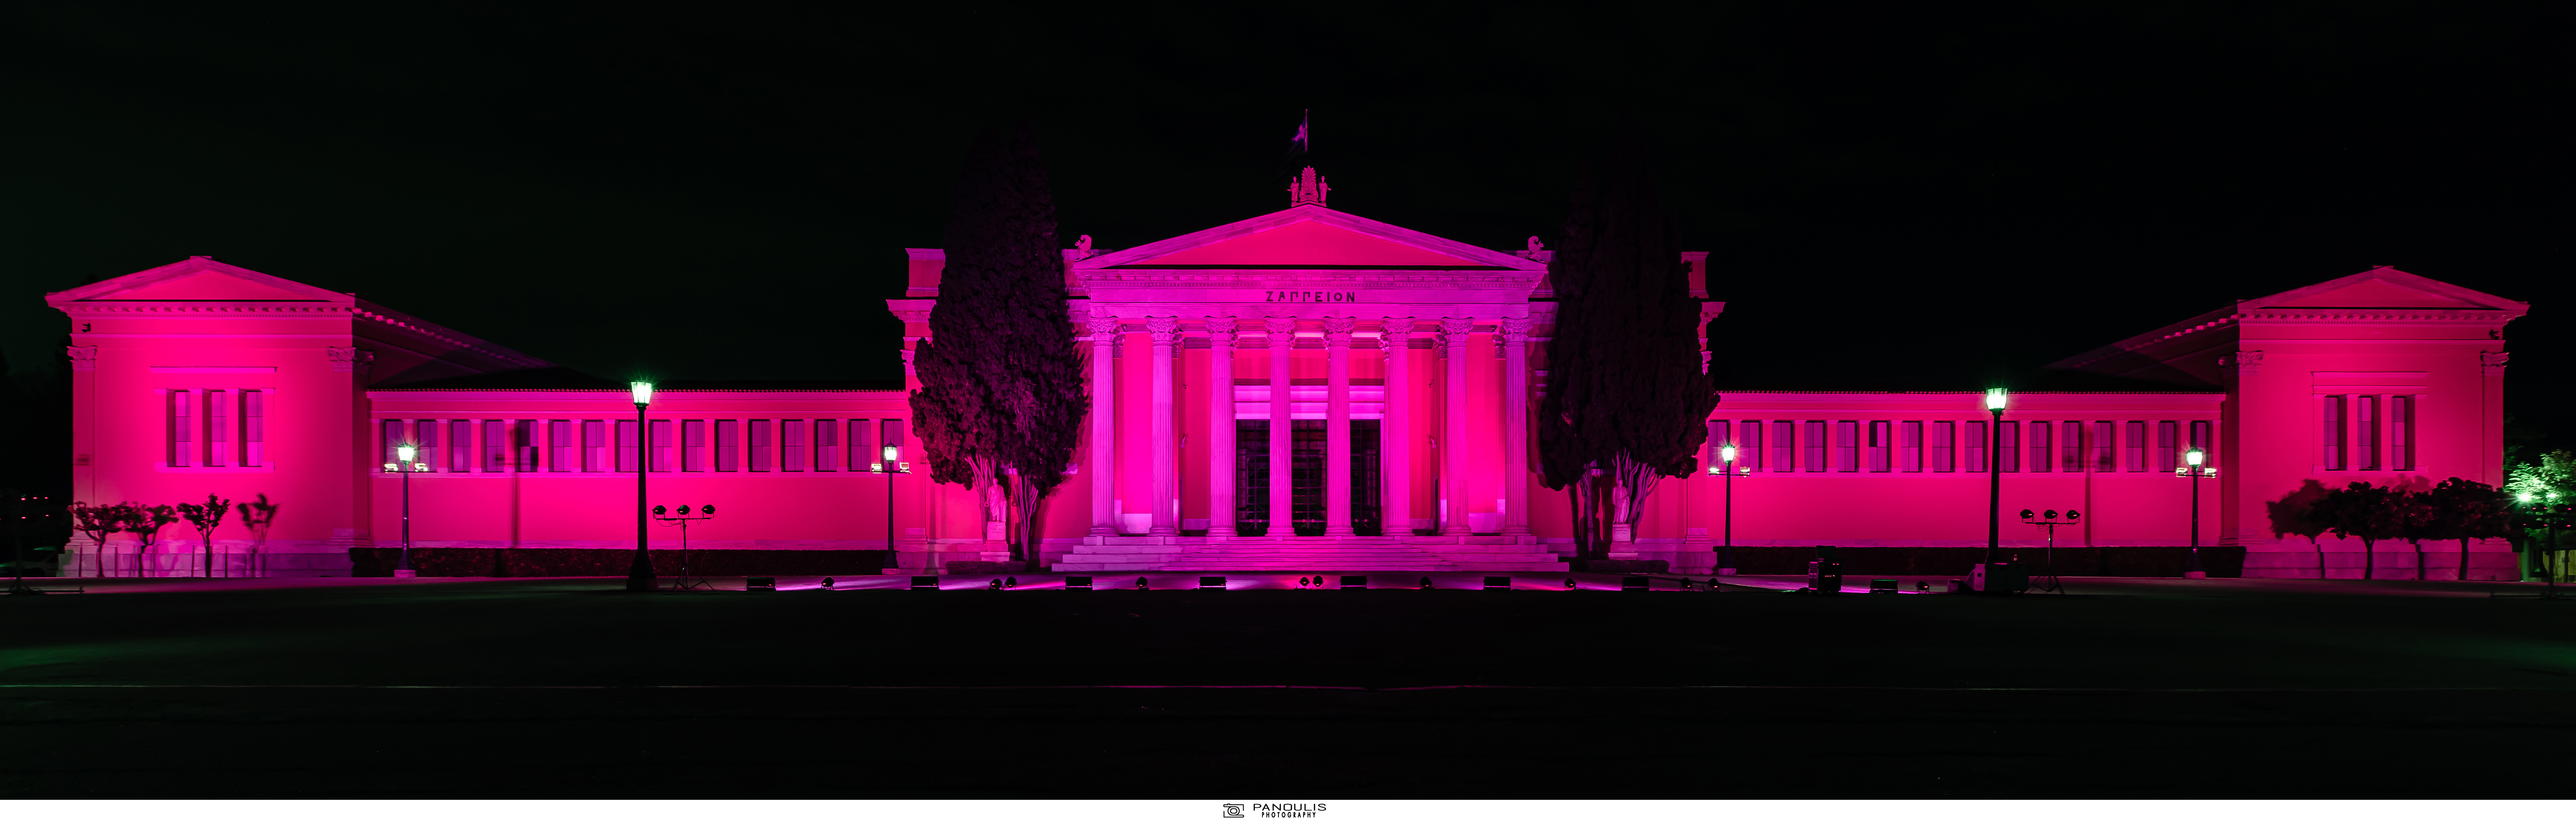 H Estée Lauder φωταγώγησε το Ζάππειο Μέγαρο στο πλαίσιο της Παγκόσμιας Εκστρατείας Ενημέρωσης για τον Καρκίνο του Μαστού